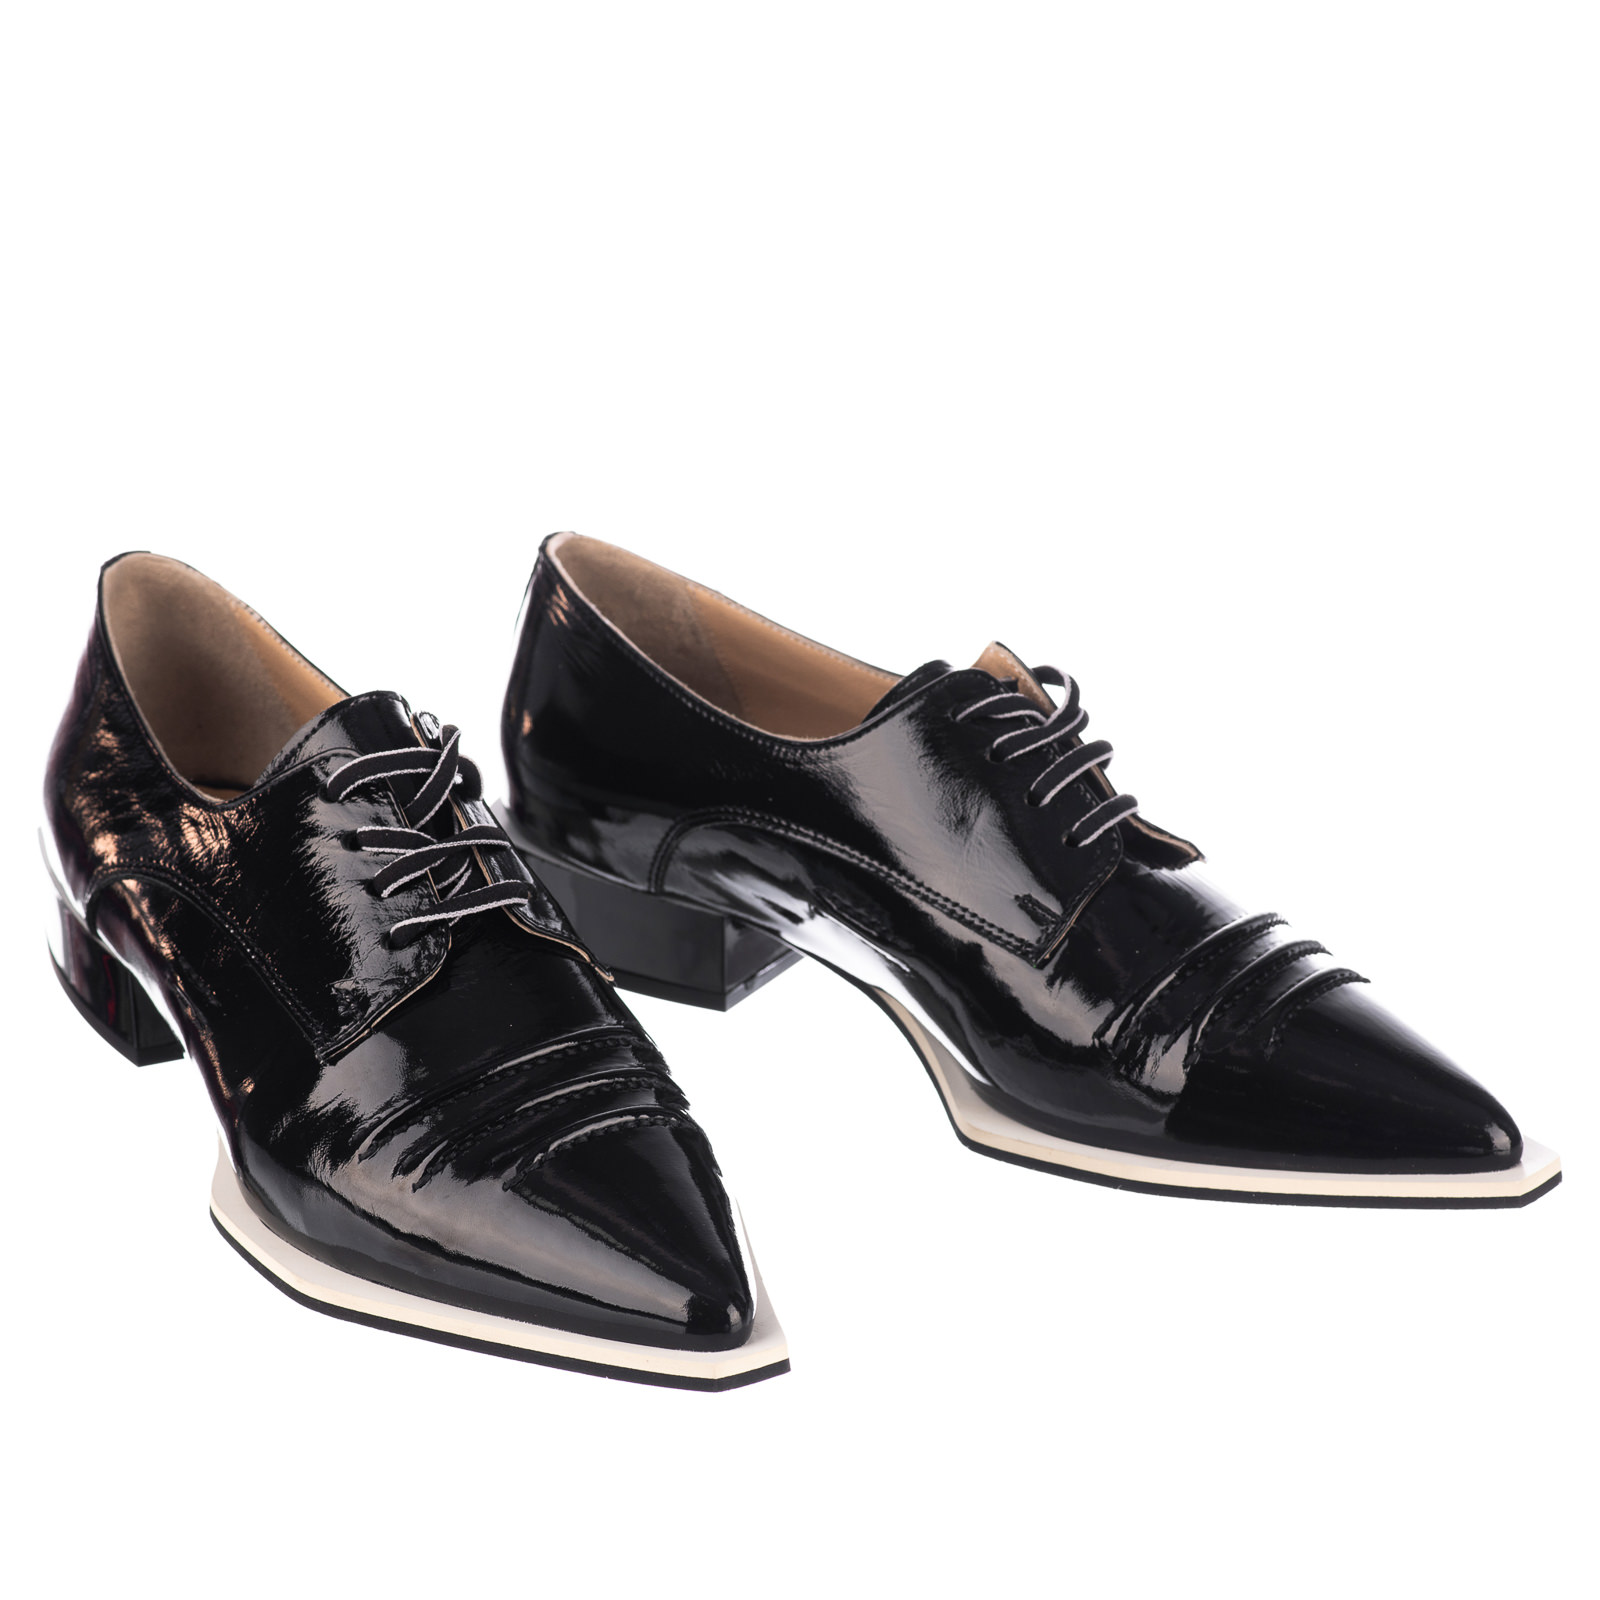 Leather shoes & flats B661 - BLACK